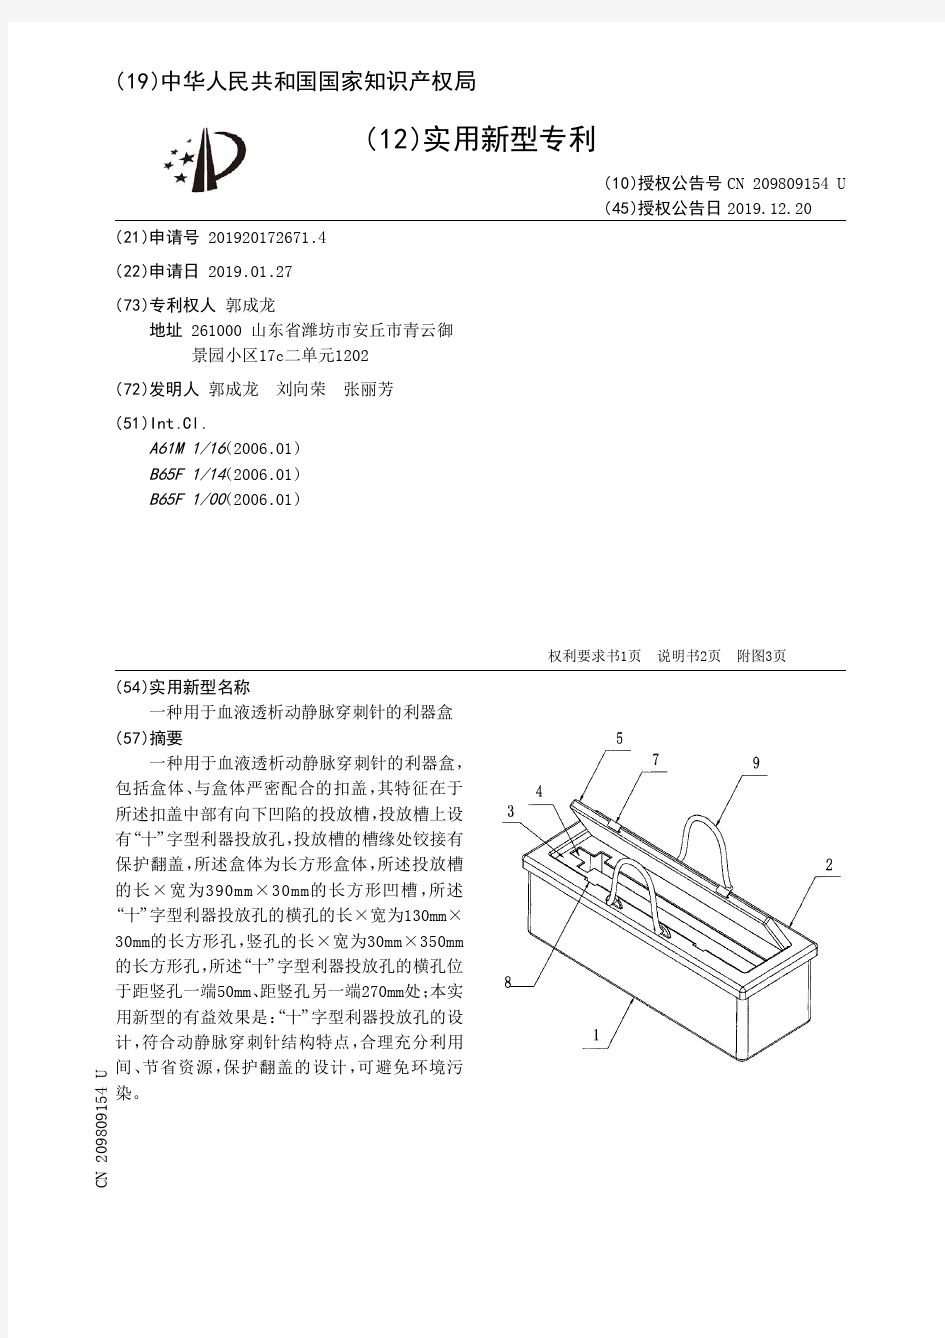 【CN209809154U】一种用于血液透析动静脉穿刺针的利器盒【专利】